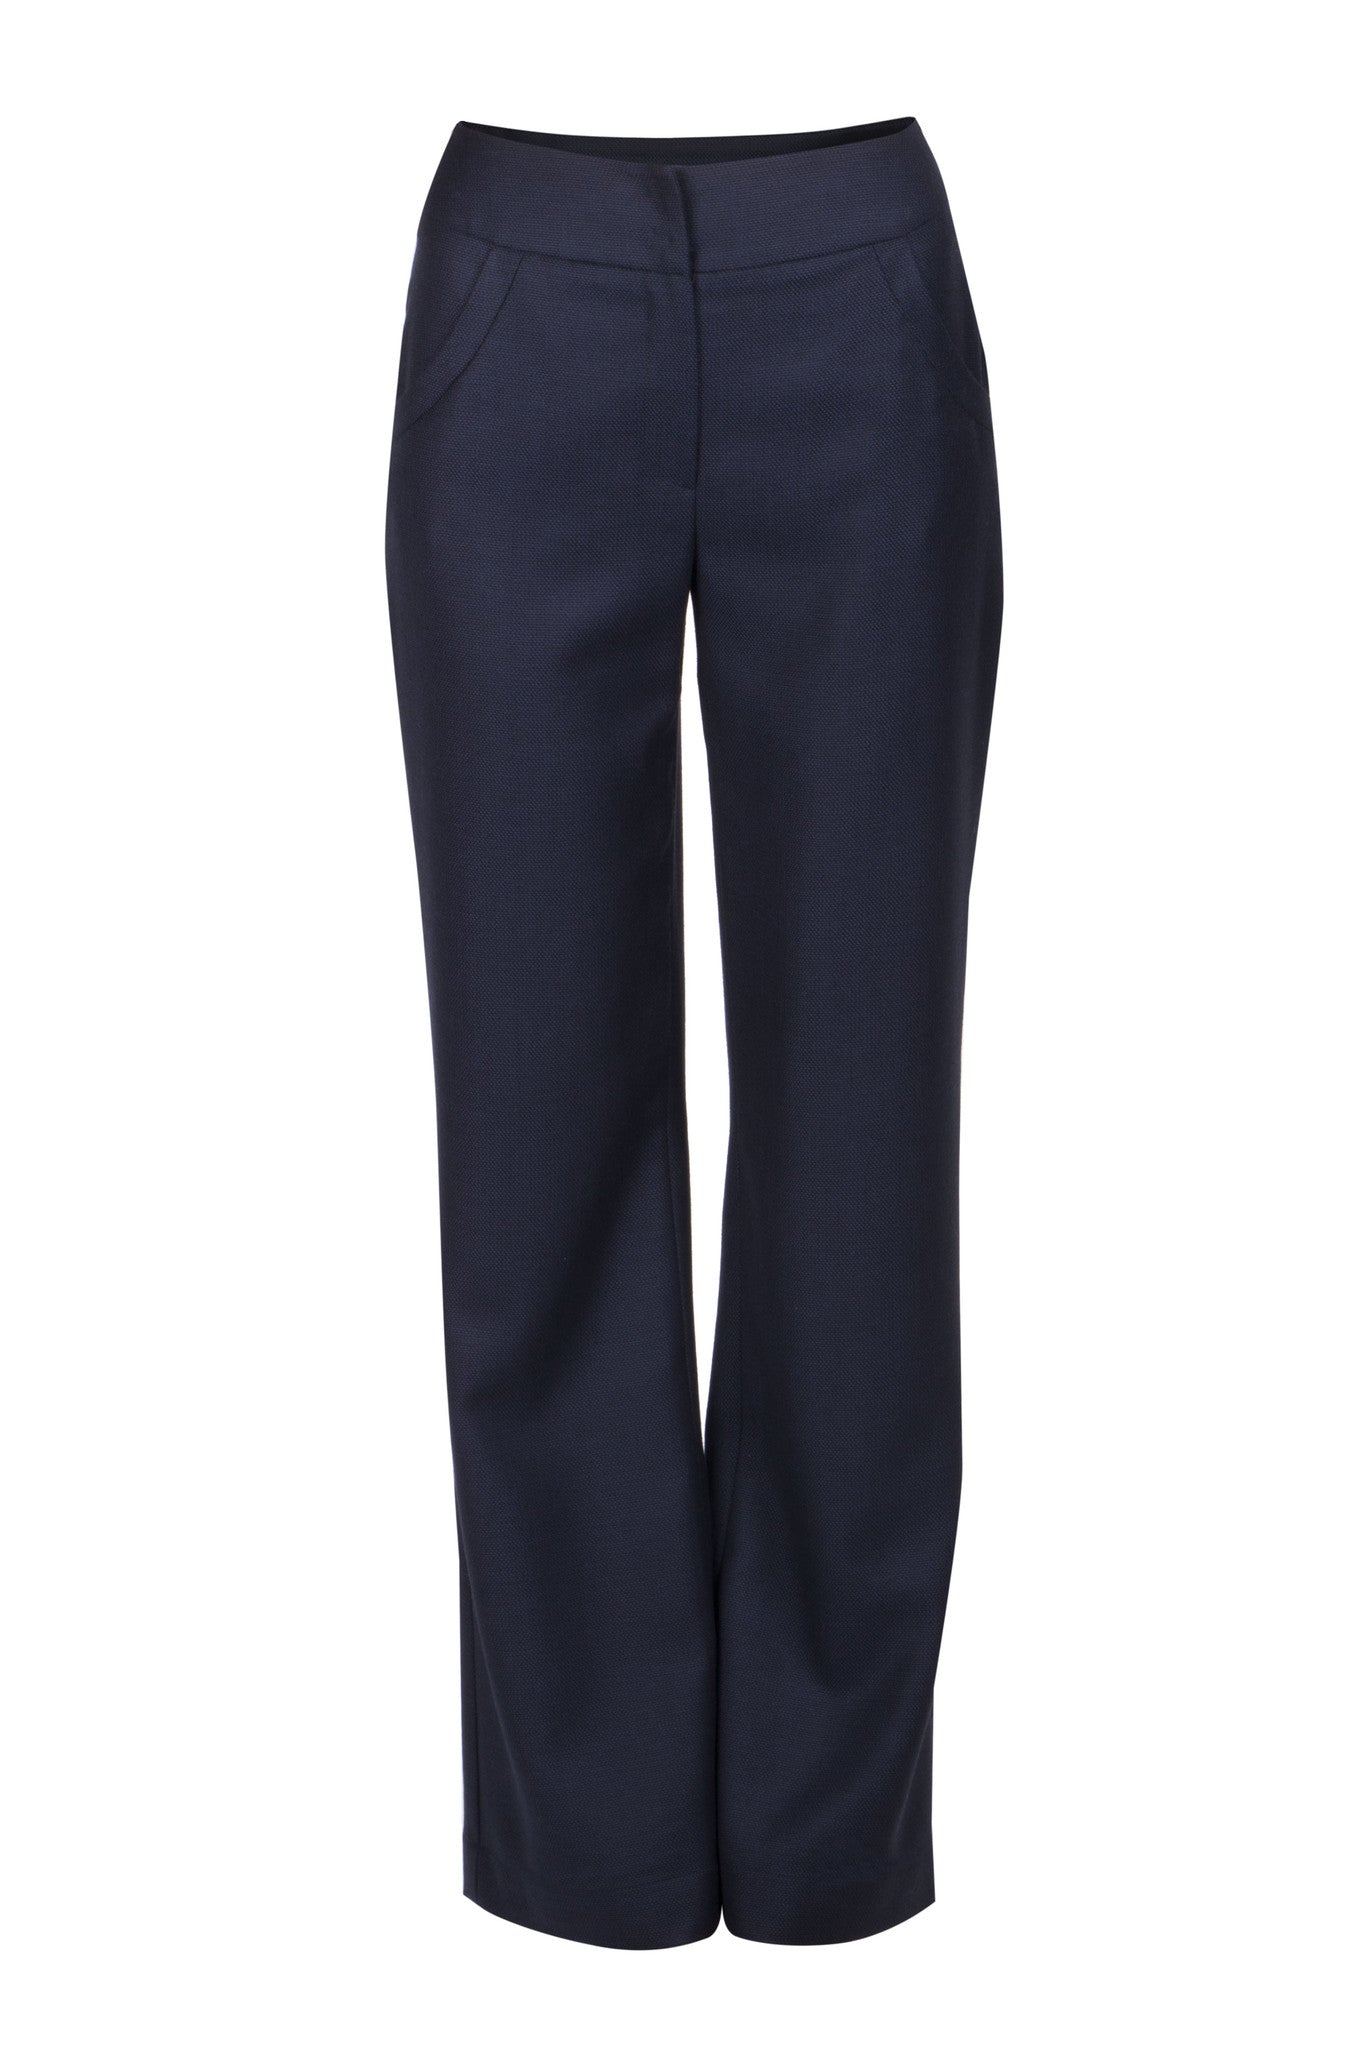 Navy blue wool suit pants